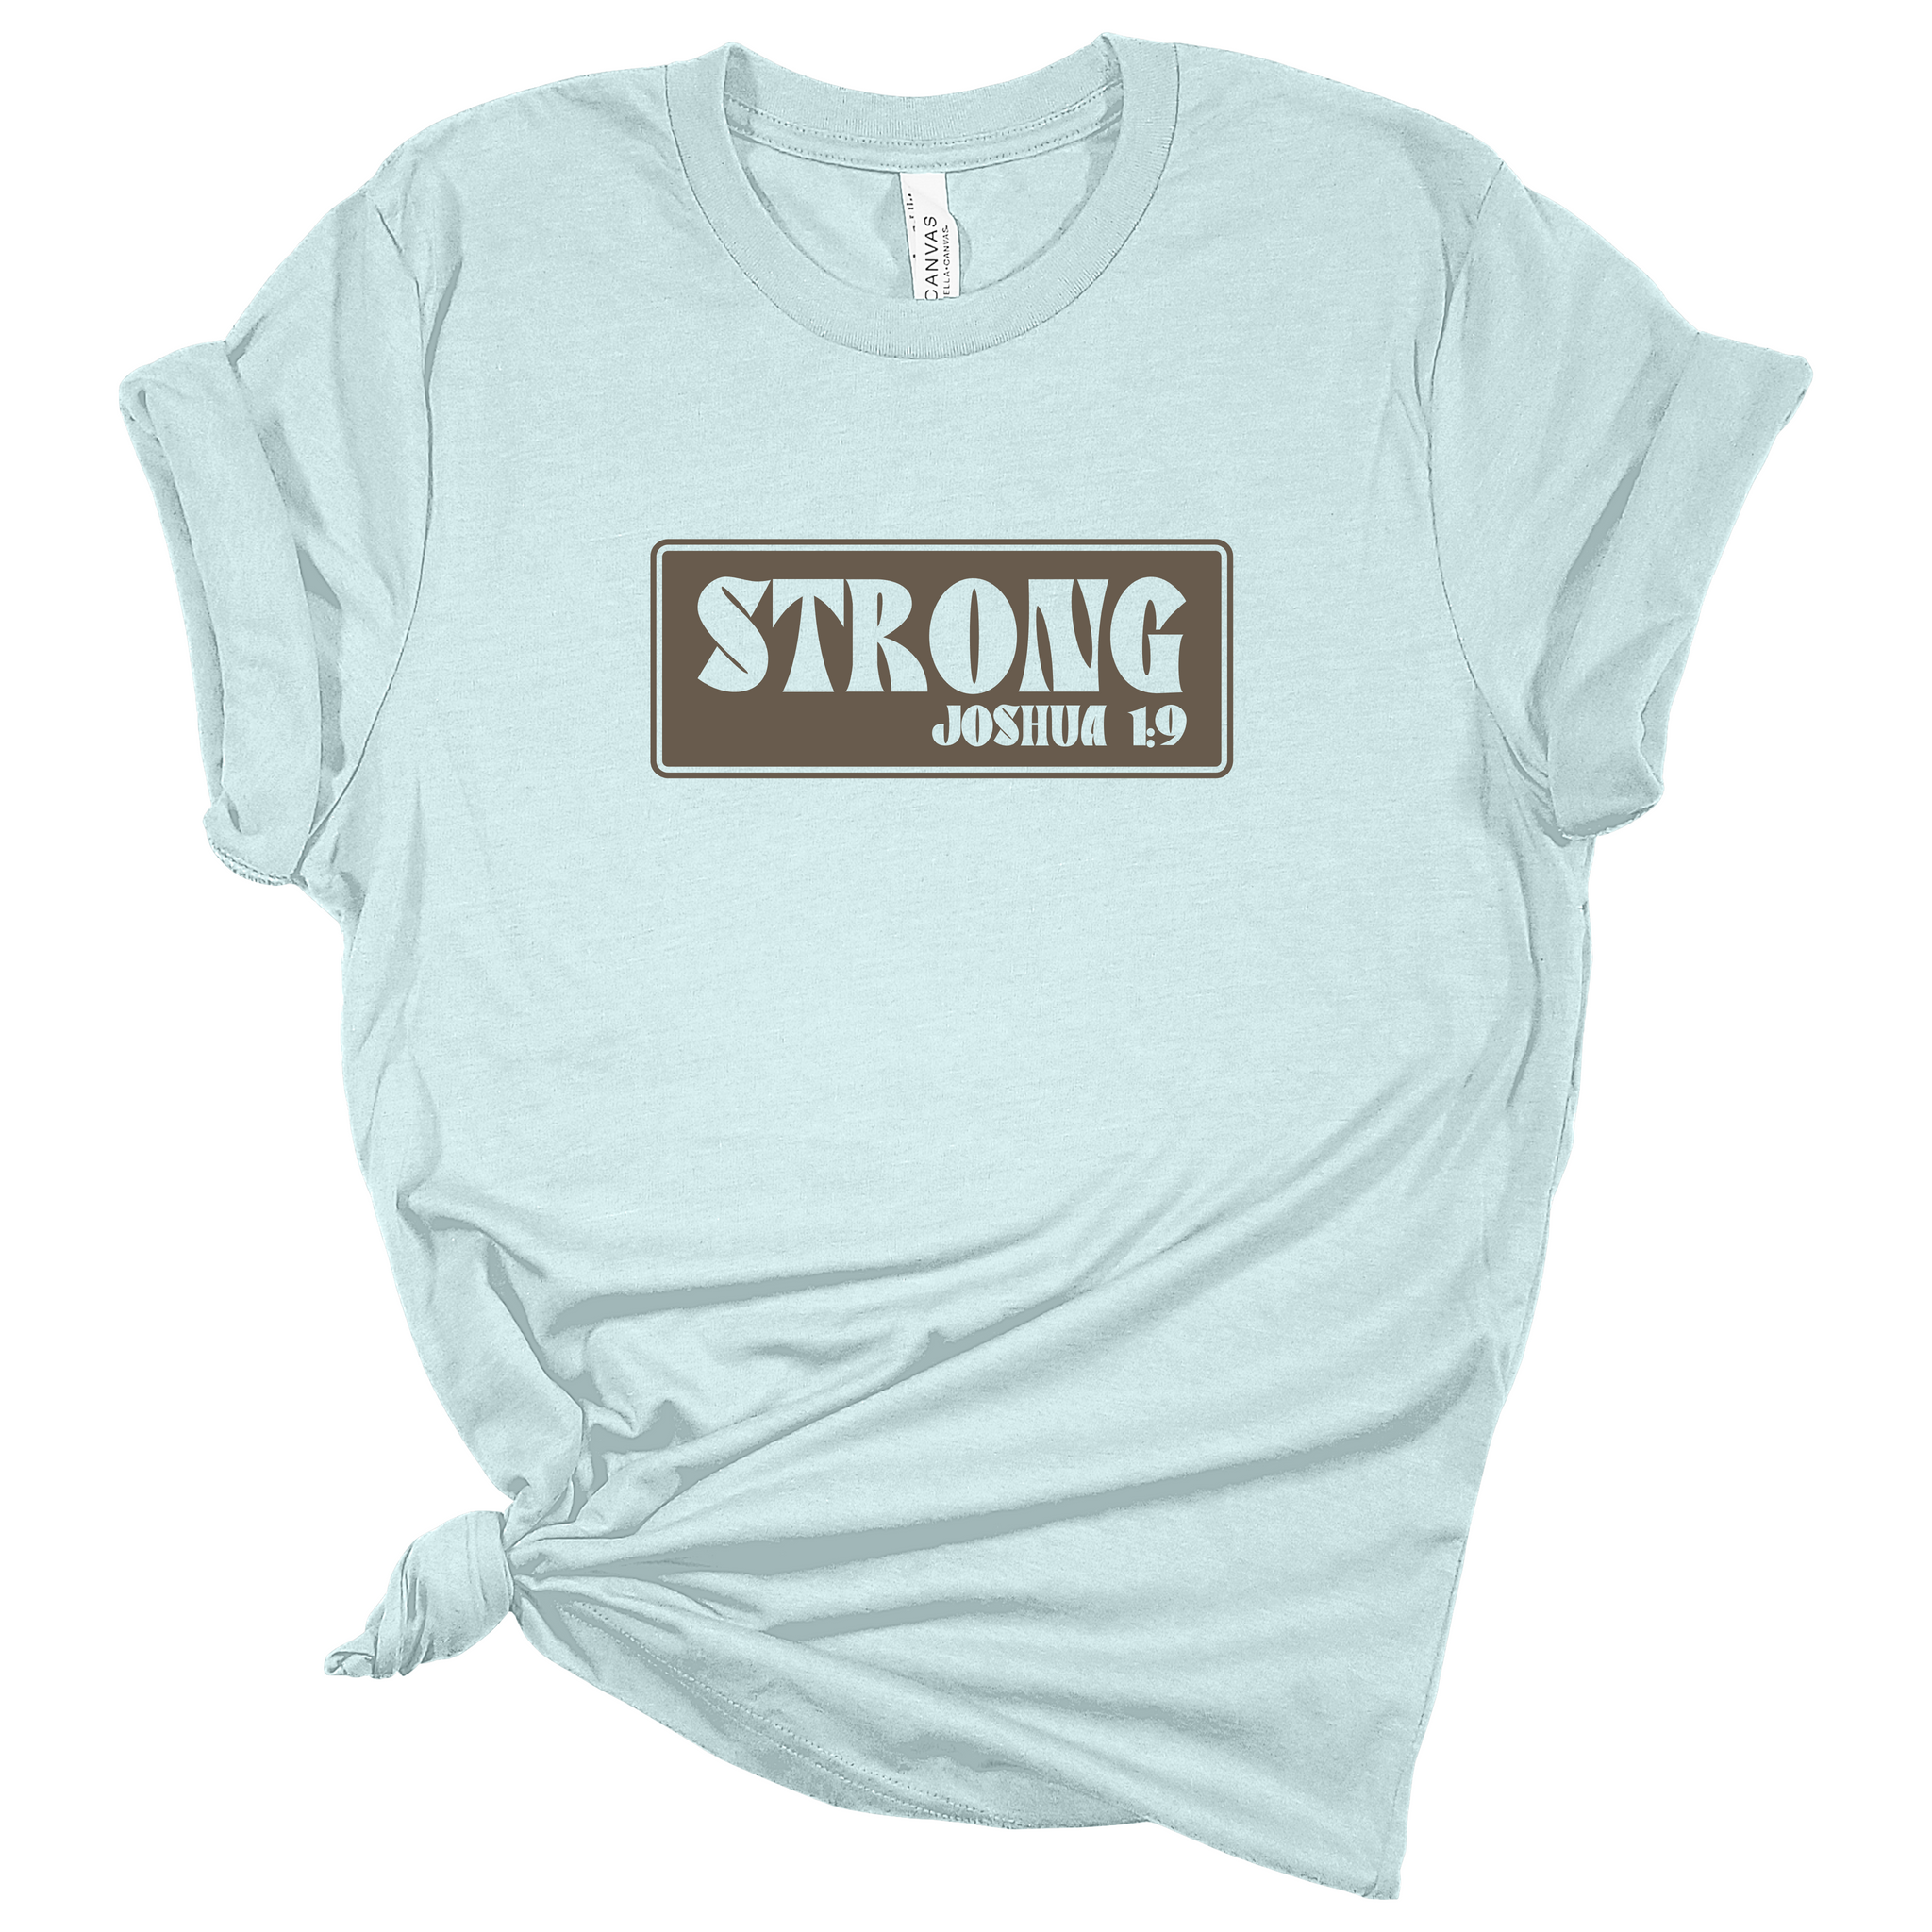 Strong Joshua 1:9 Verse - Light Blue Short Sleeve Tshirt - Adult & Women's Gym Shirt - S001